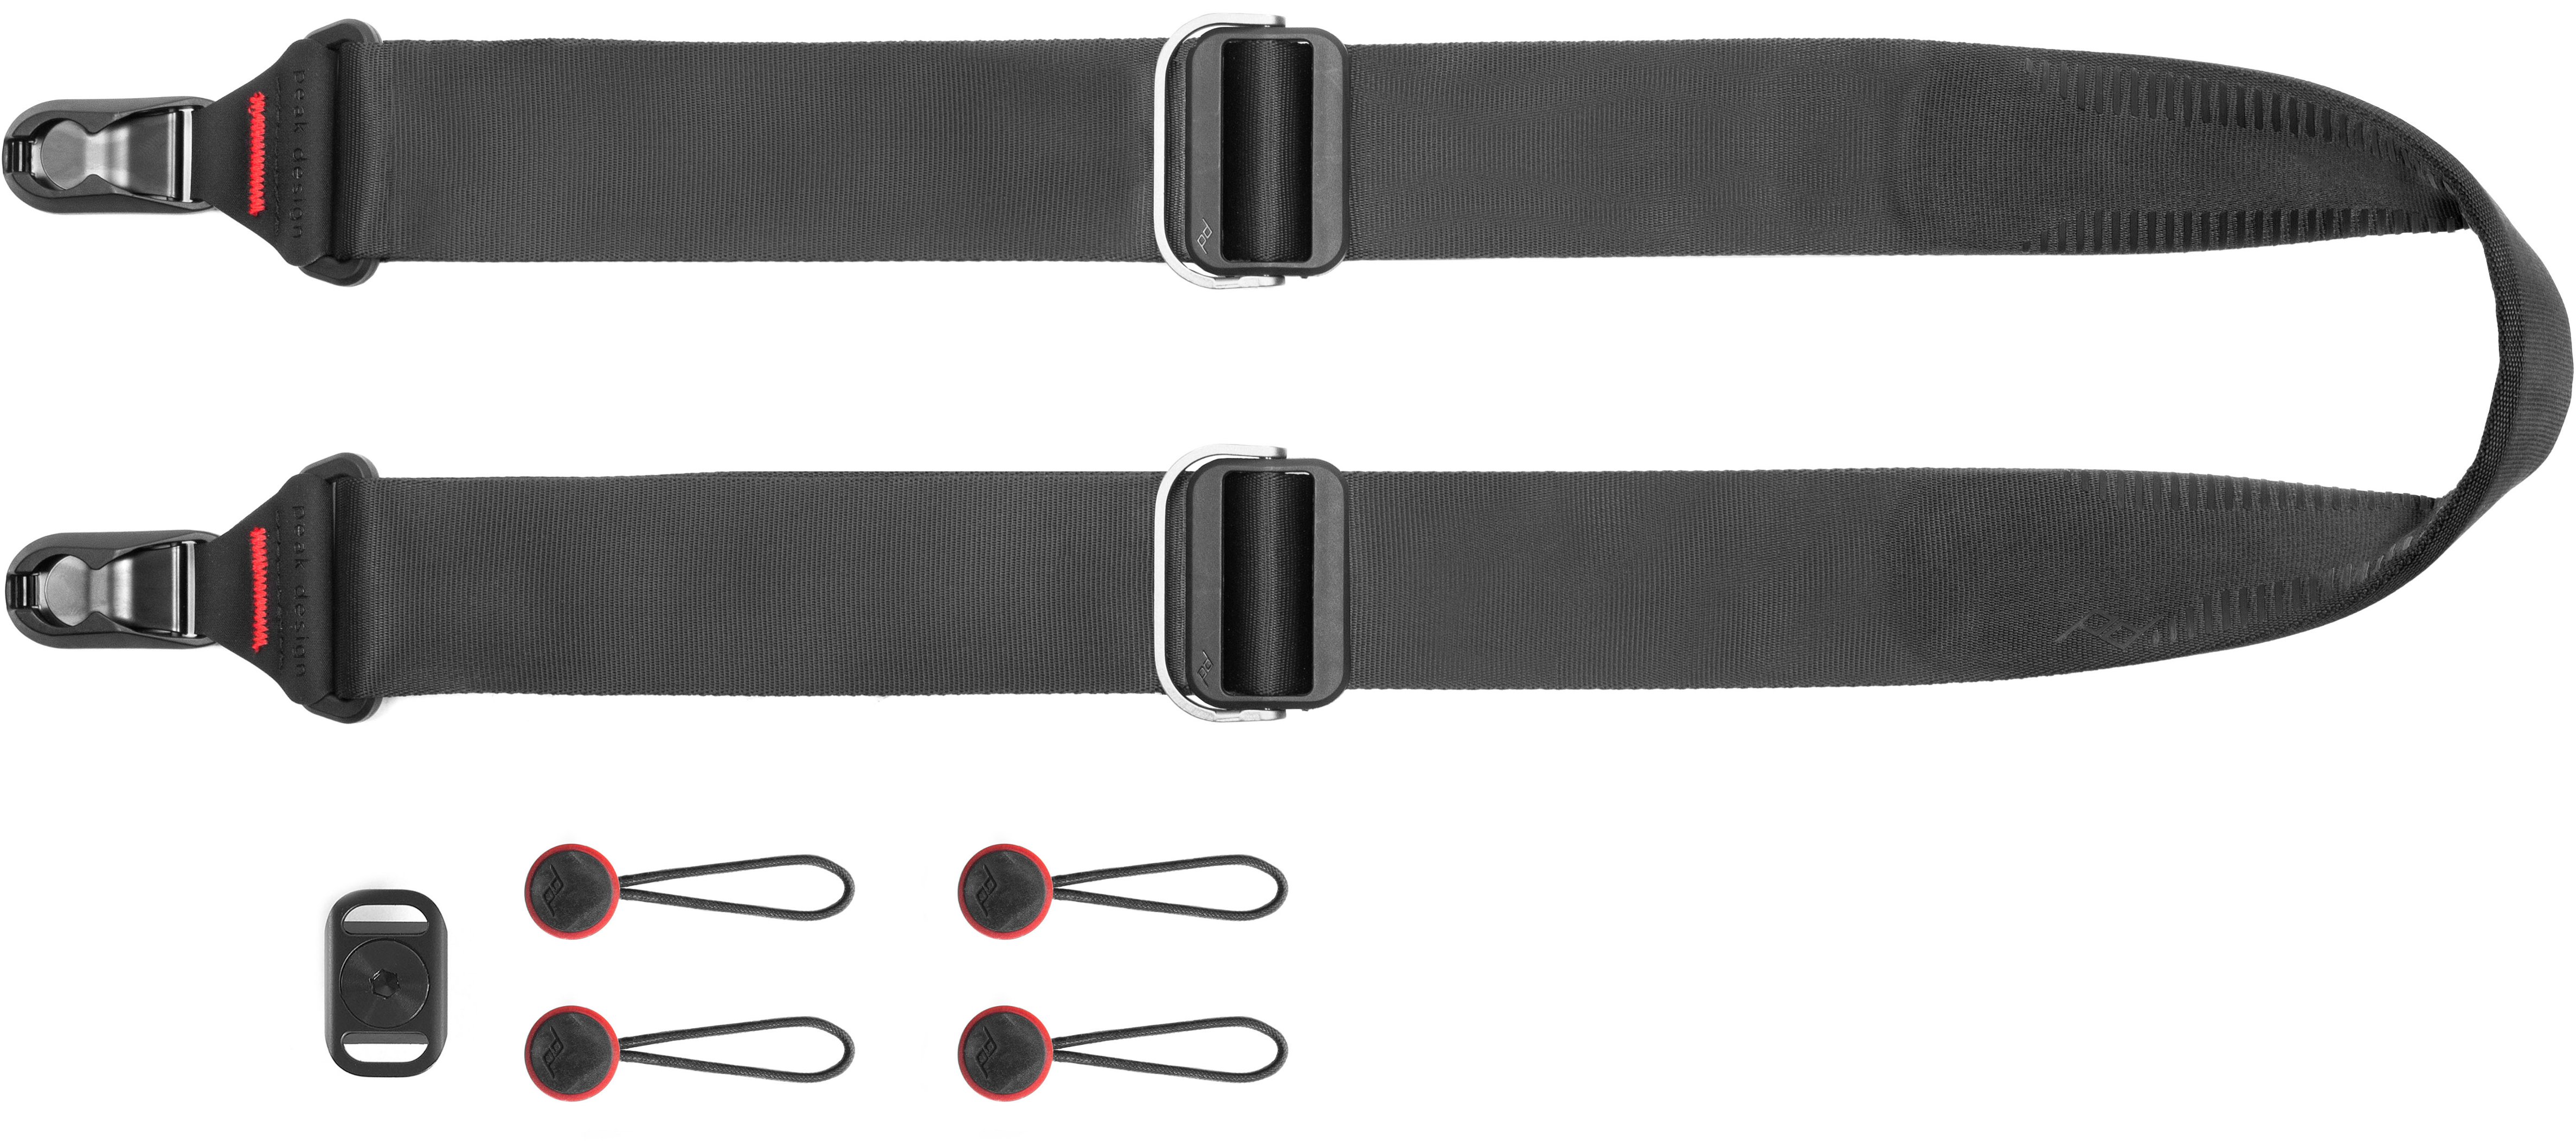 NEU ledergrif fur HMV oder Columbia koffergerat new strap for your portable 